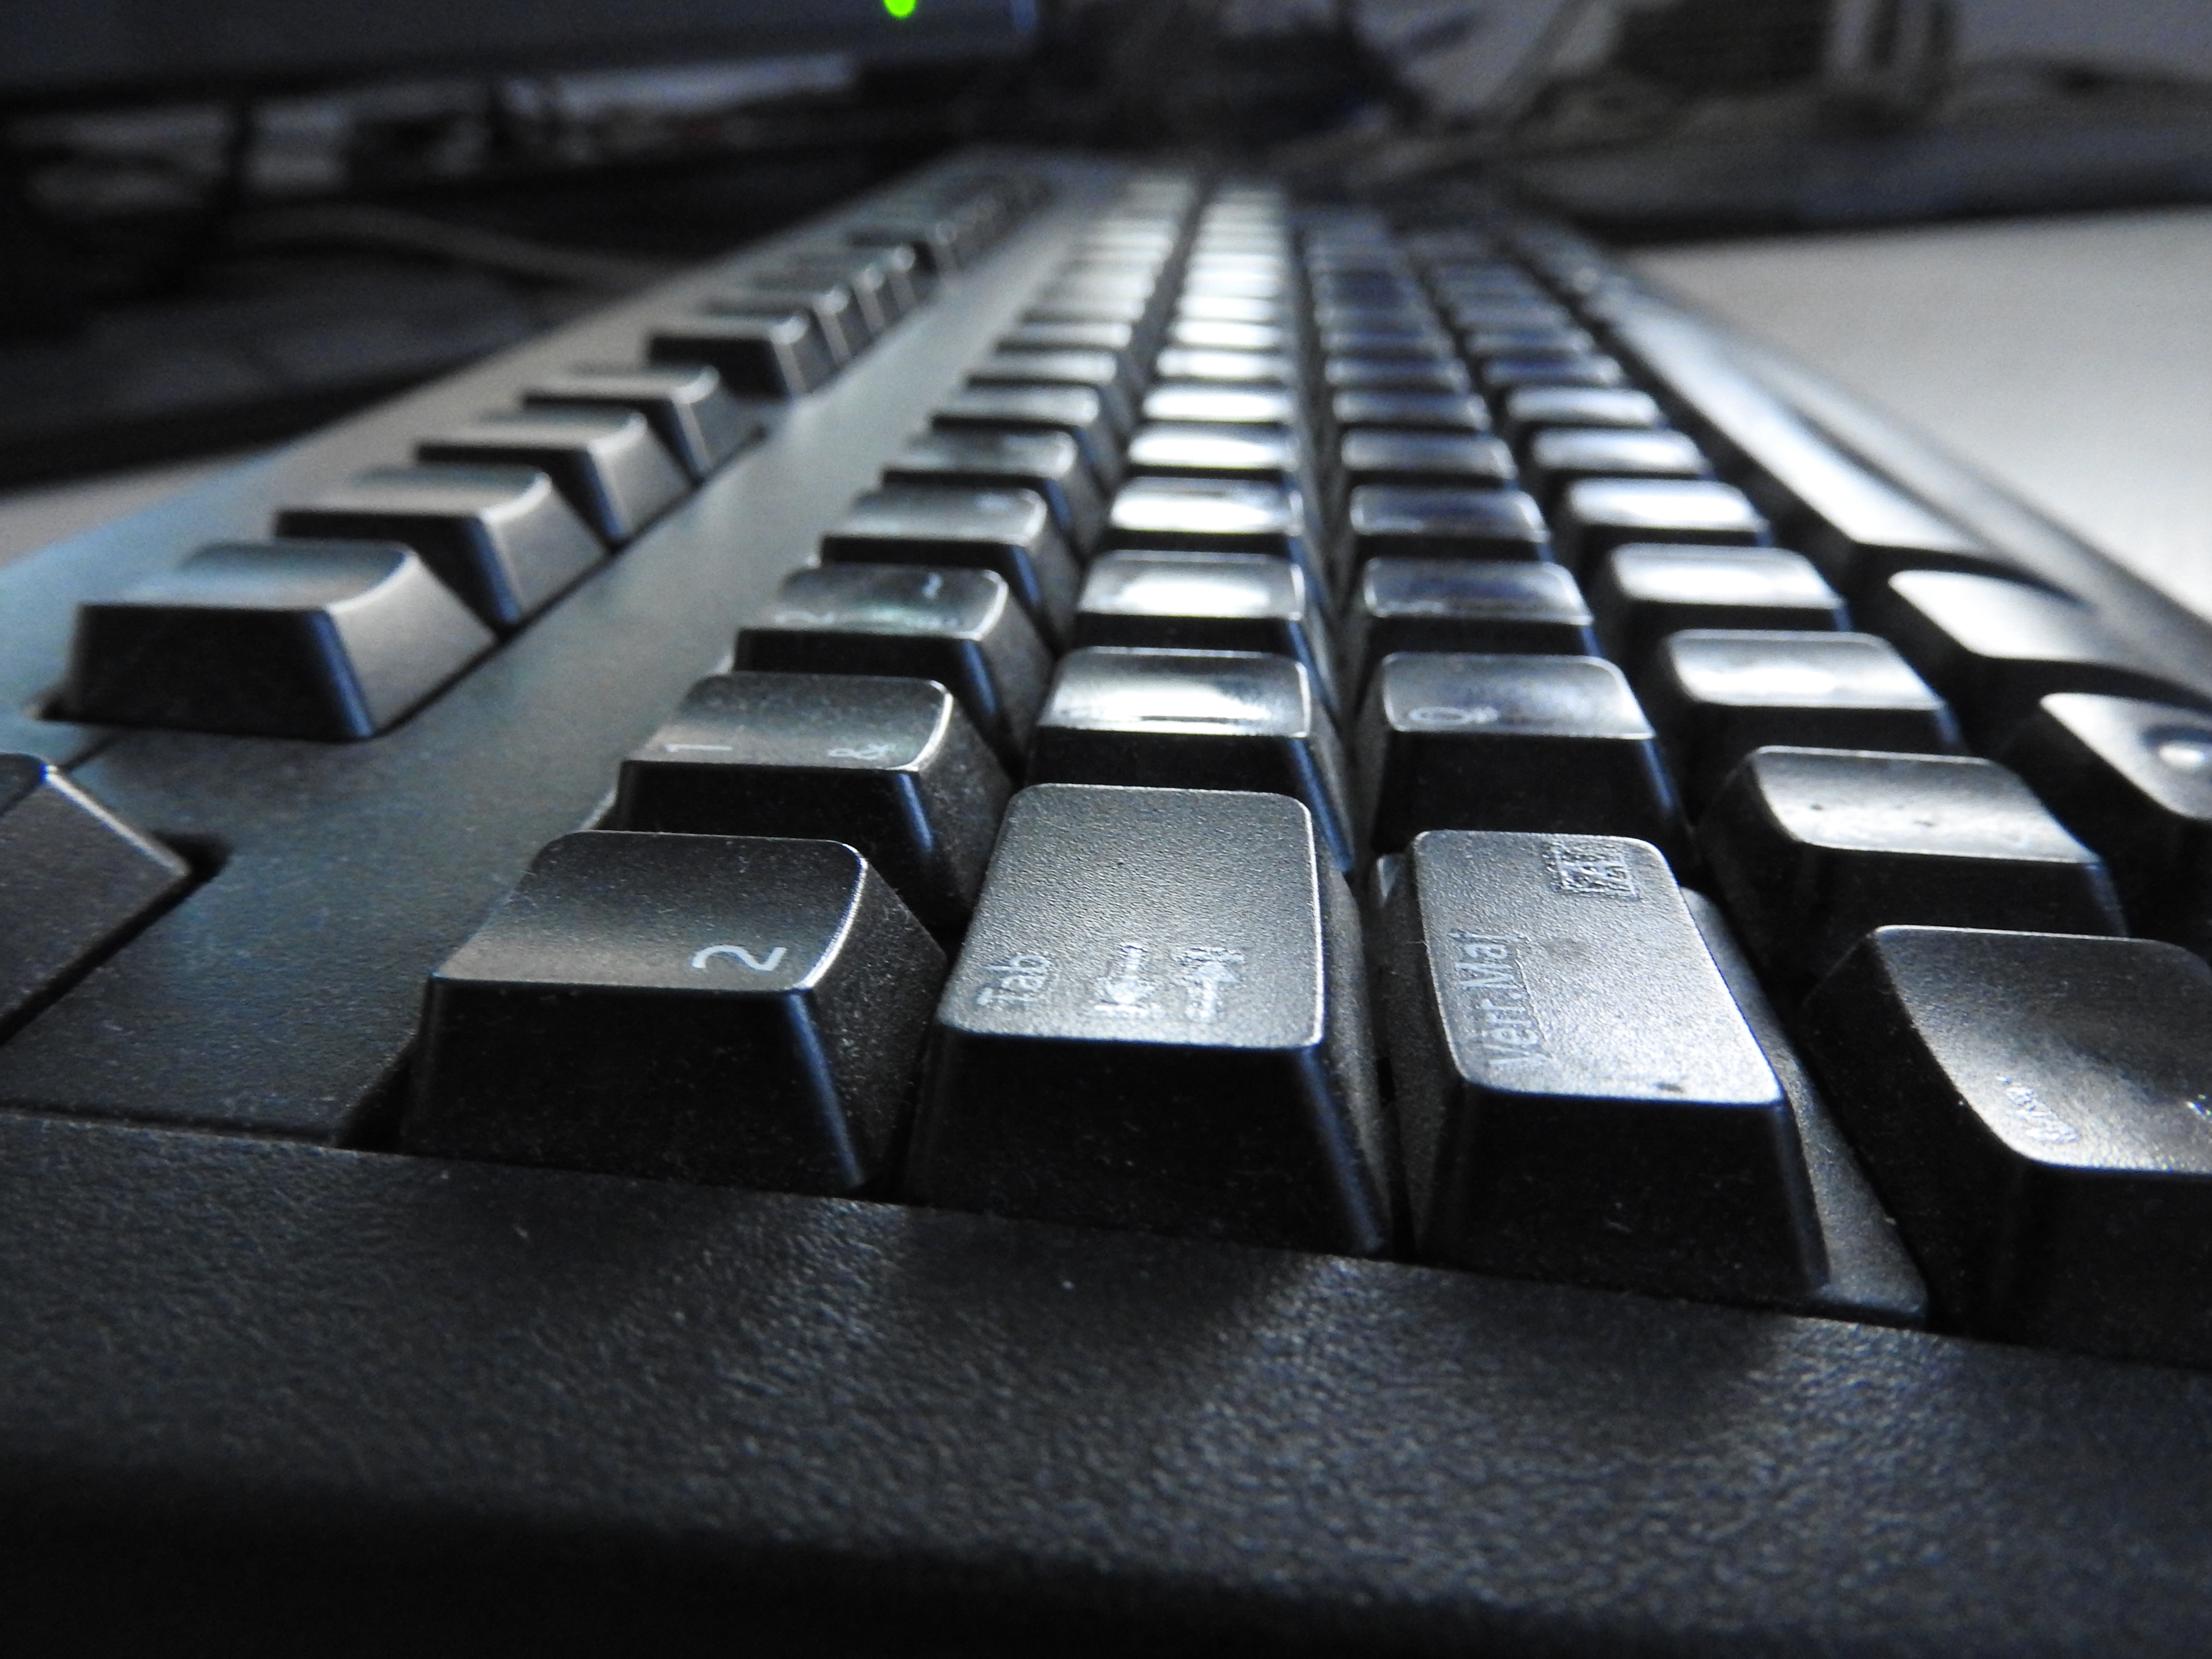 Close-up image of a computer keyboard.